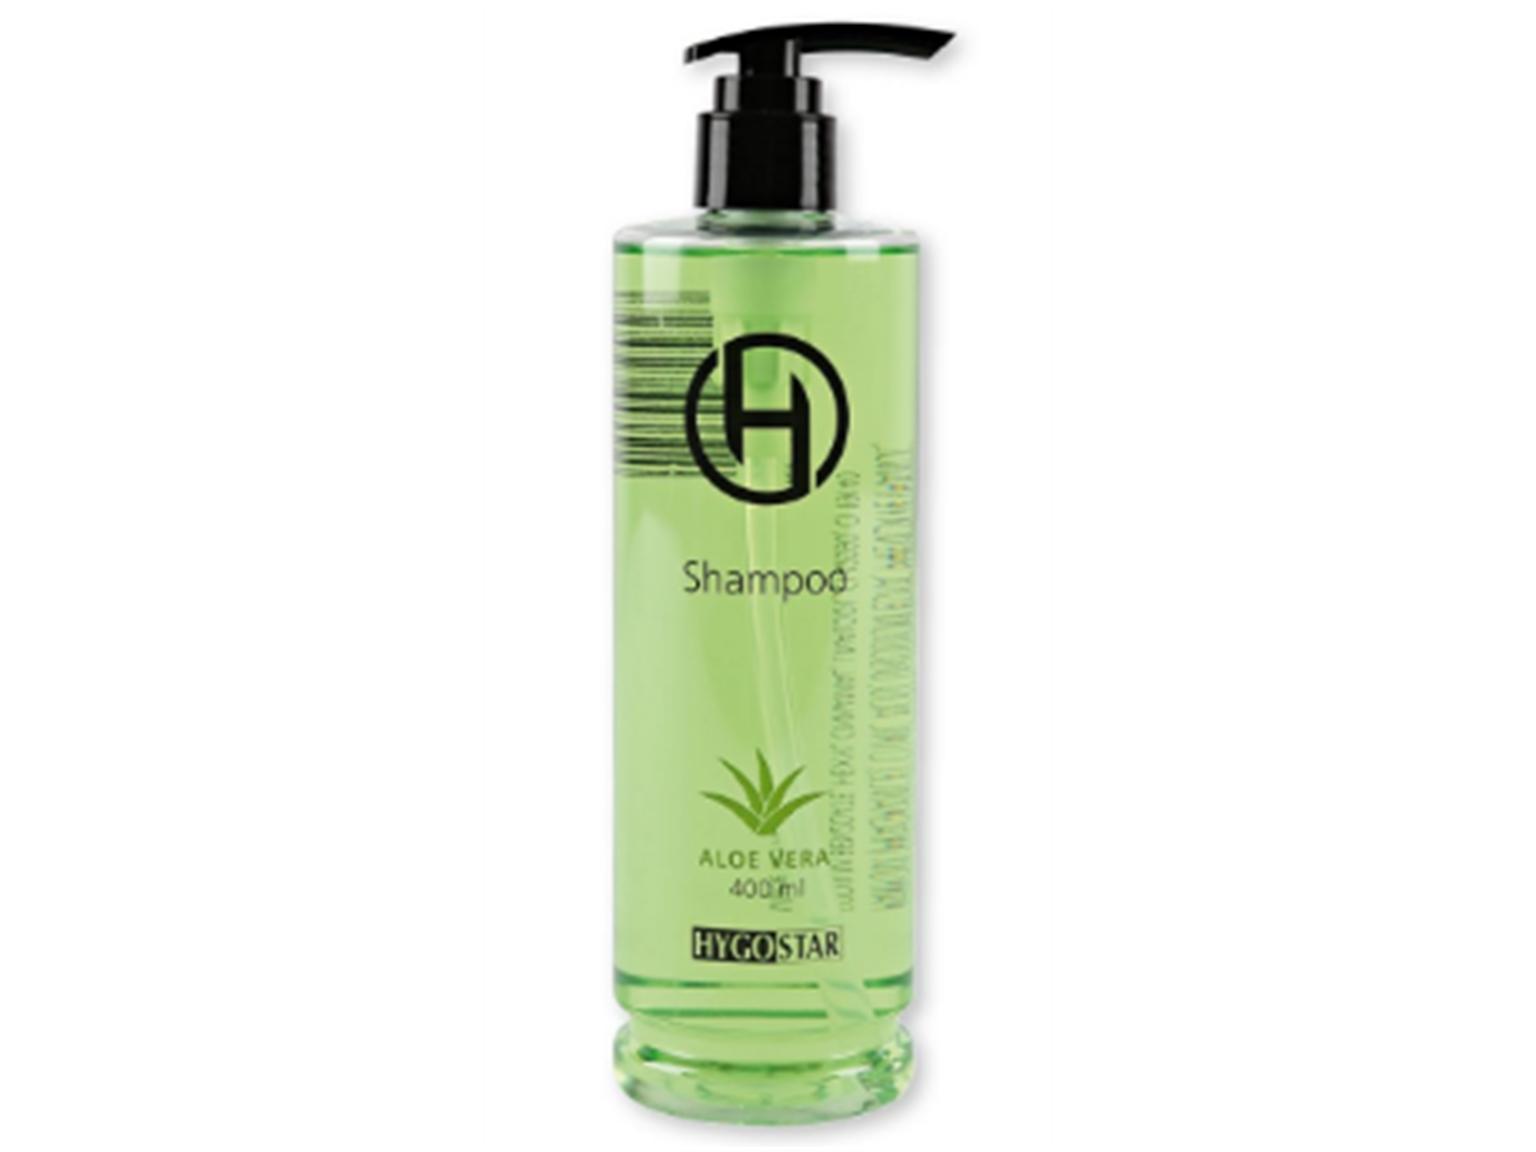 SHAMPOO HYGOSTAR  Shampoo, Pumpspender, 400 ml